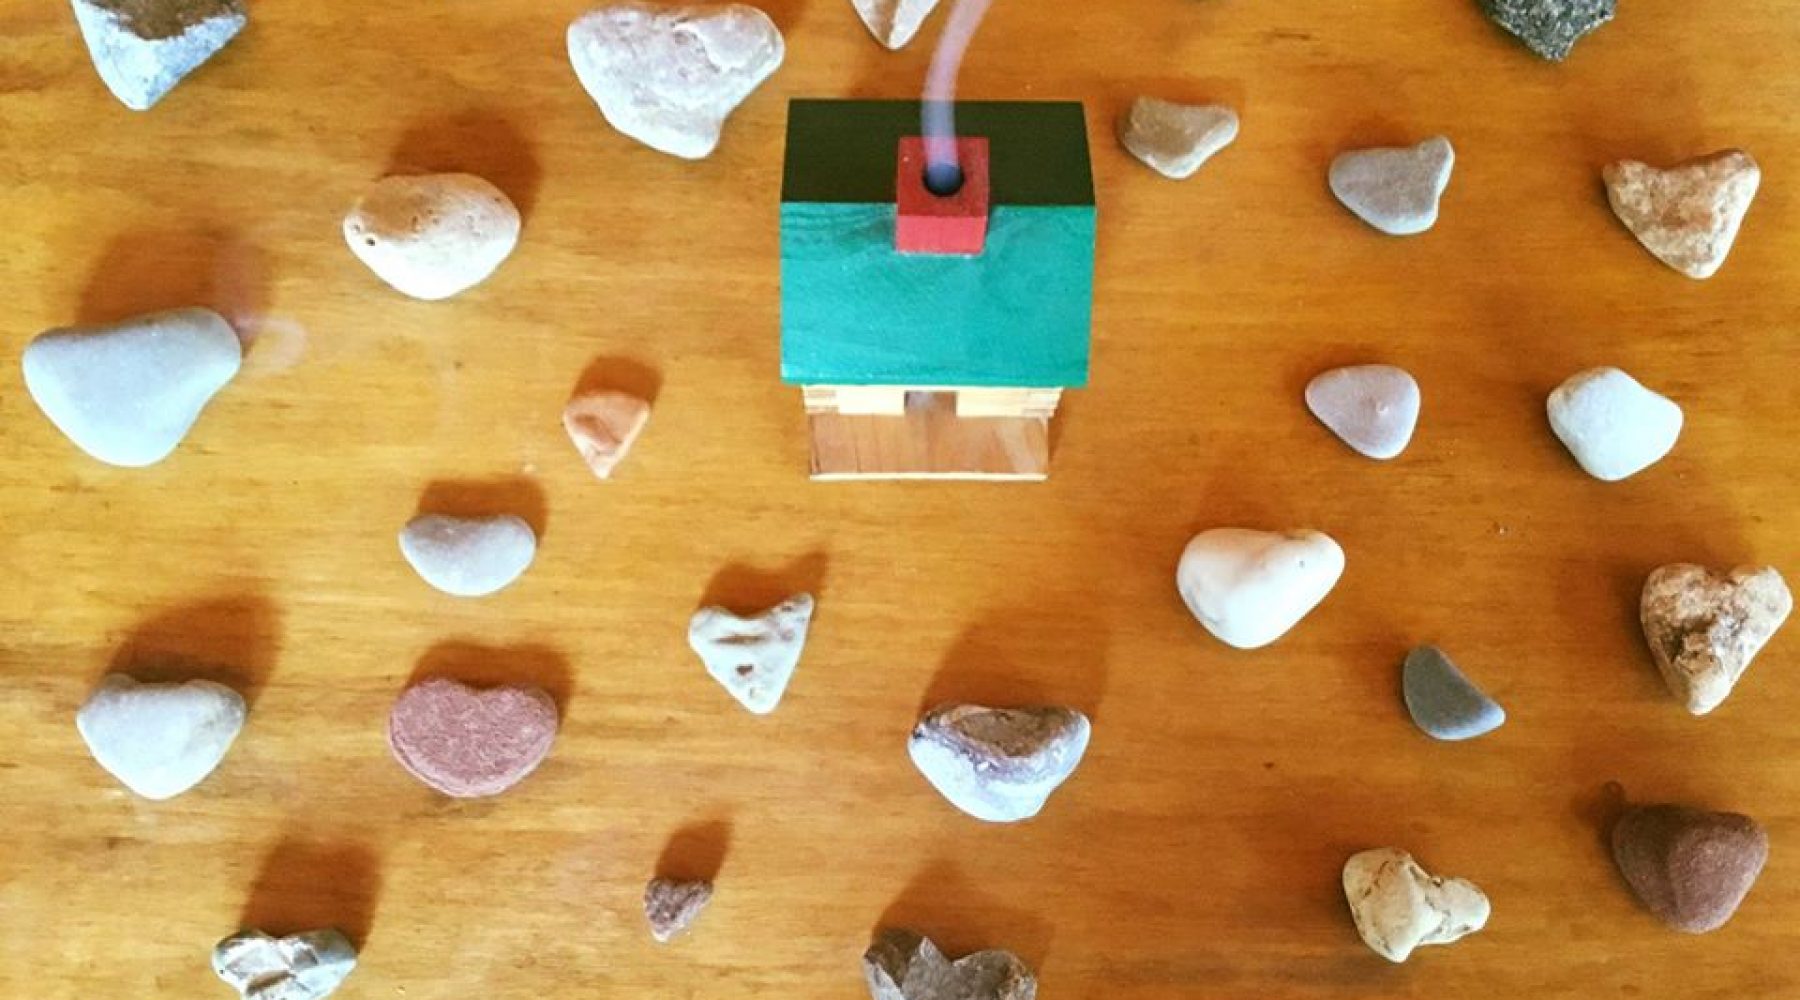 heart shaped rocks and home